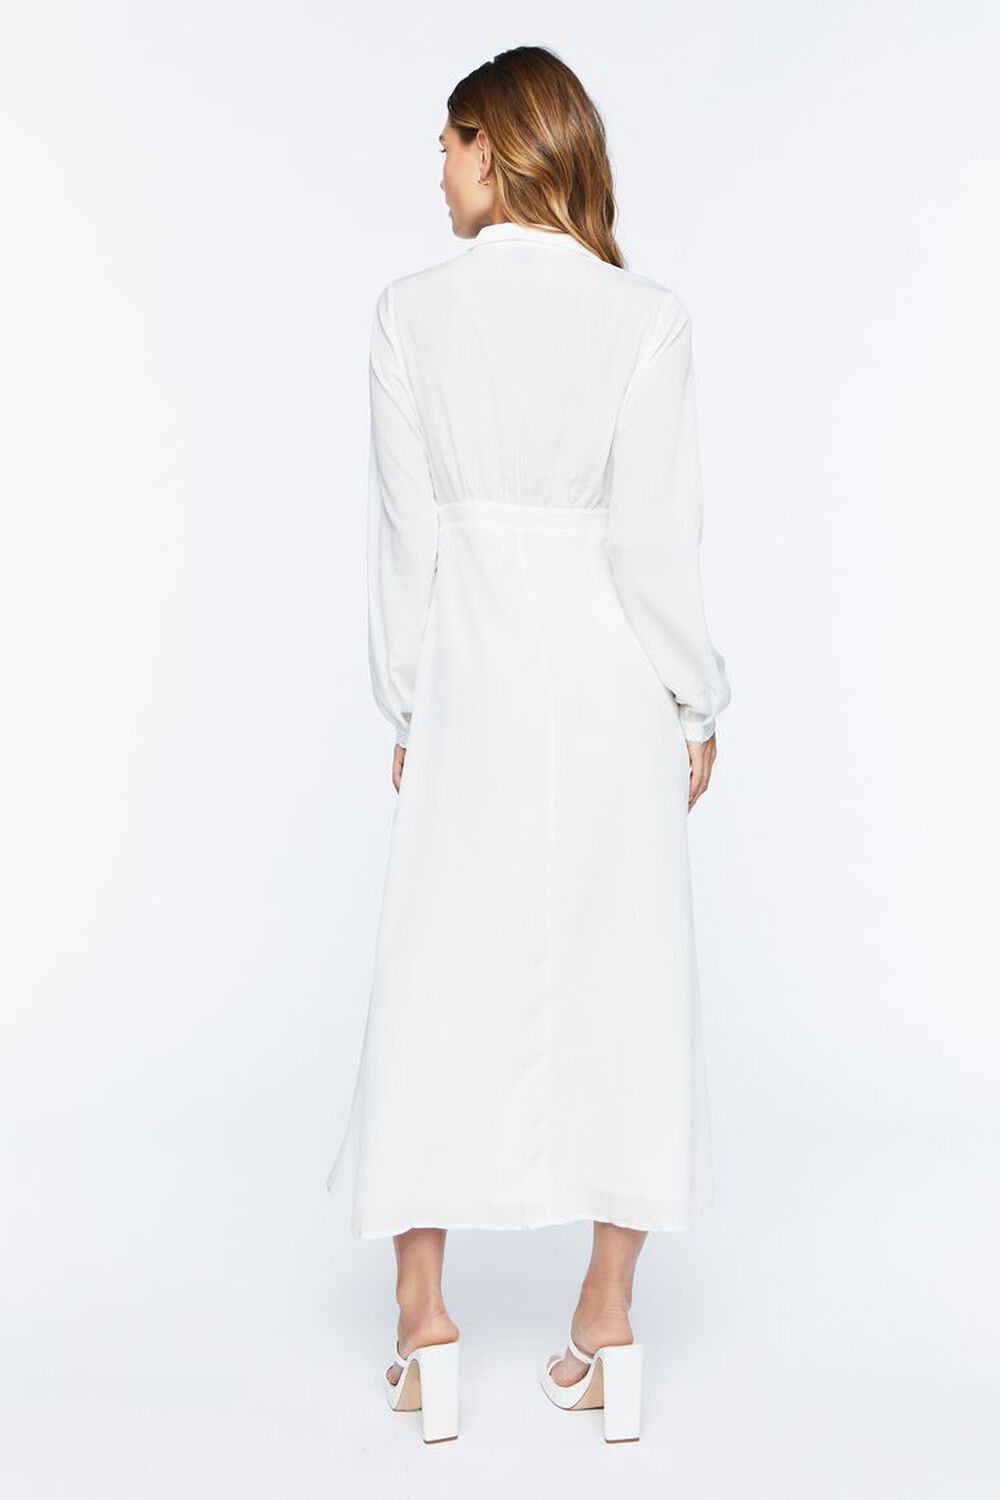 WHITE Collared Wrap Maxi Dress, image 3